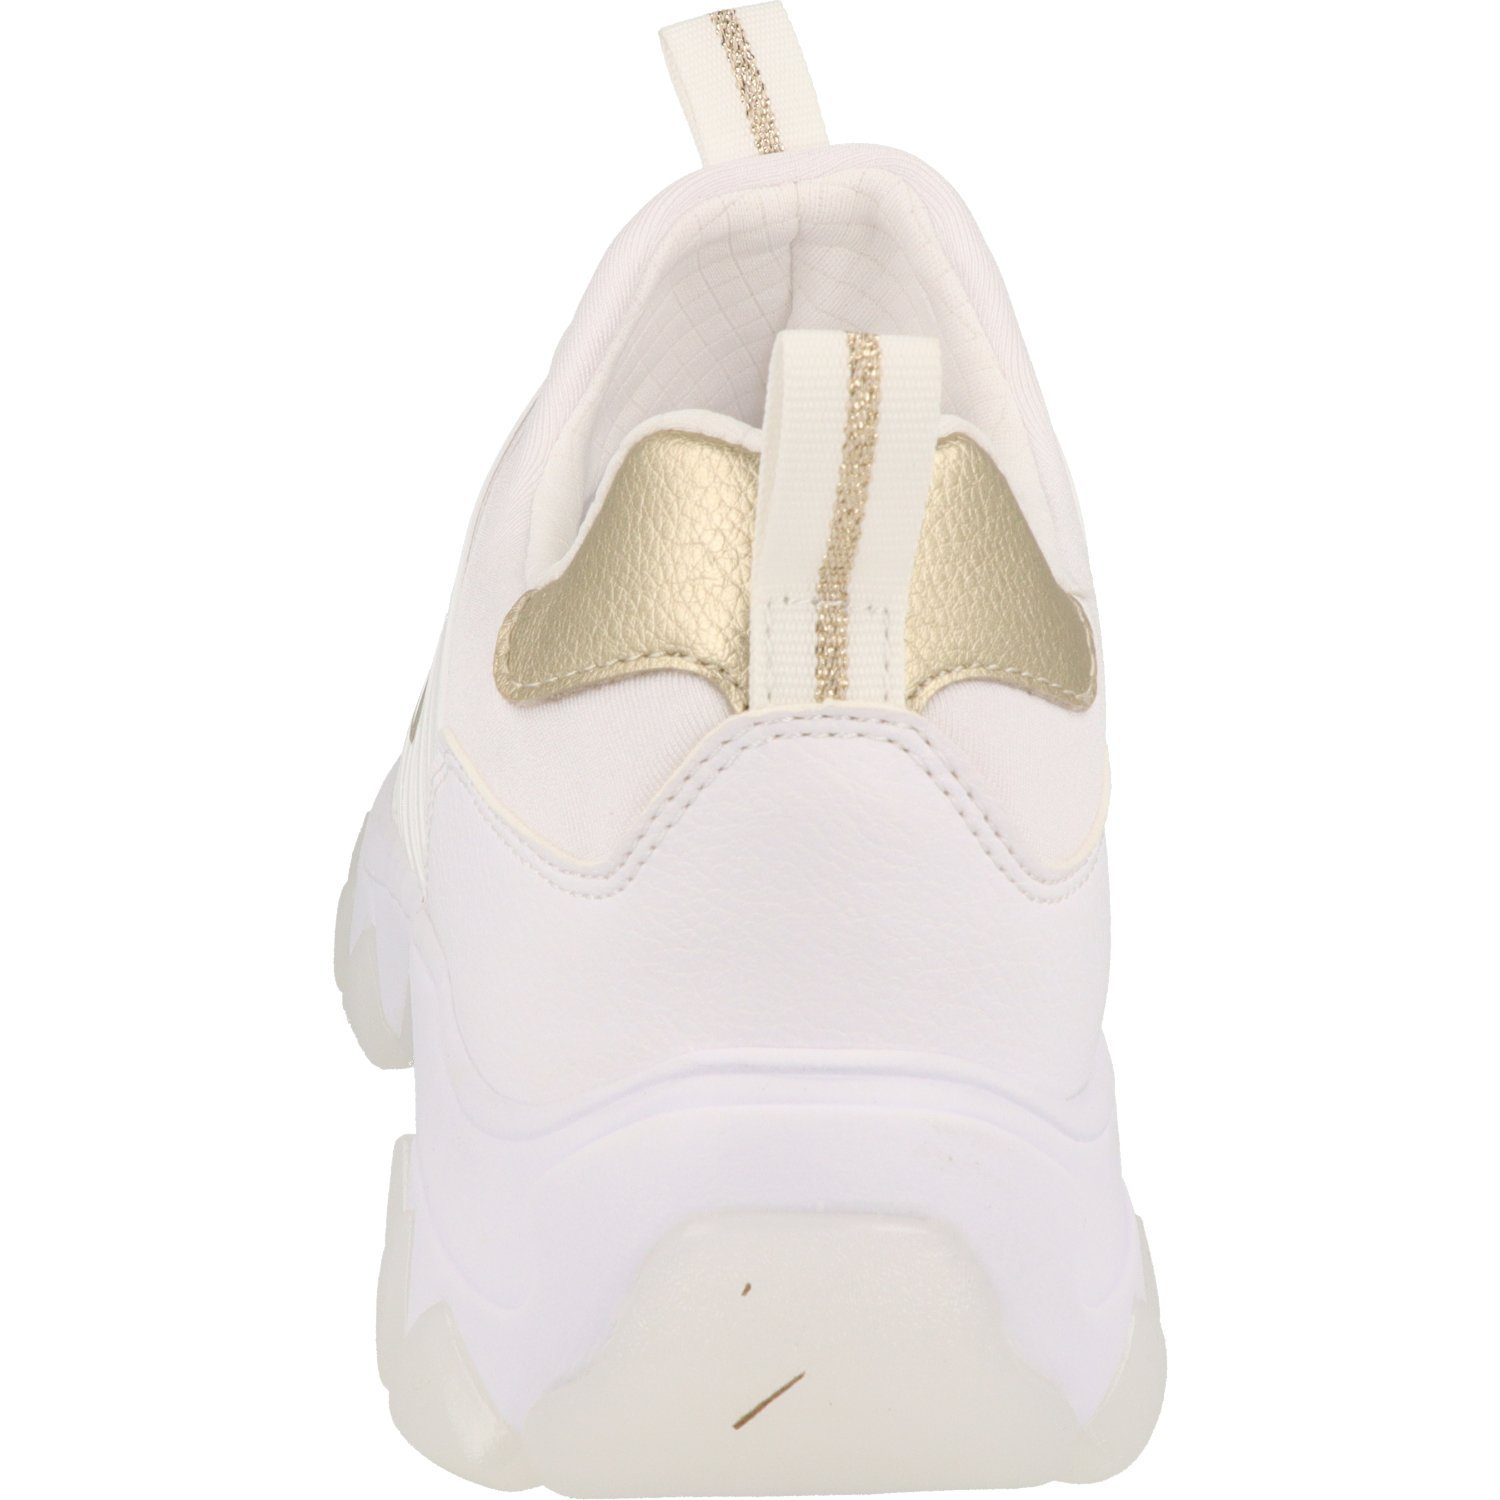 Halbschuhe Yuki White/Gold Schuhe Damen sportliche BAGATT Sneaker Sneaker D32-95207-6969